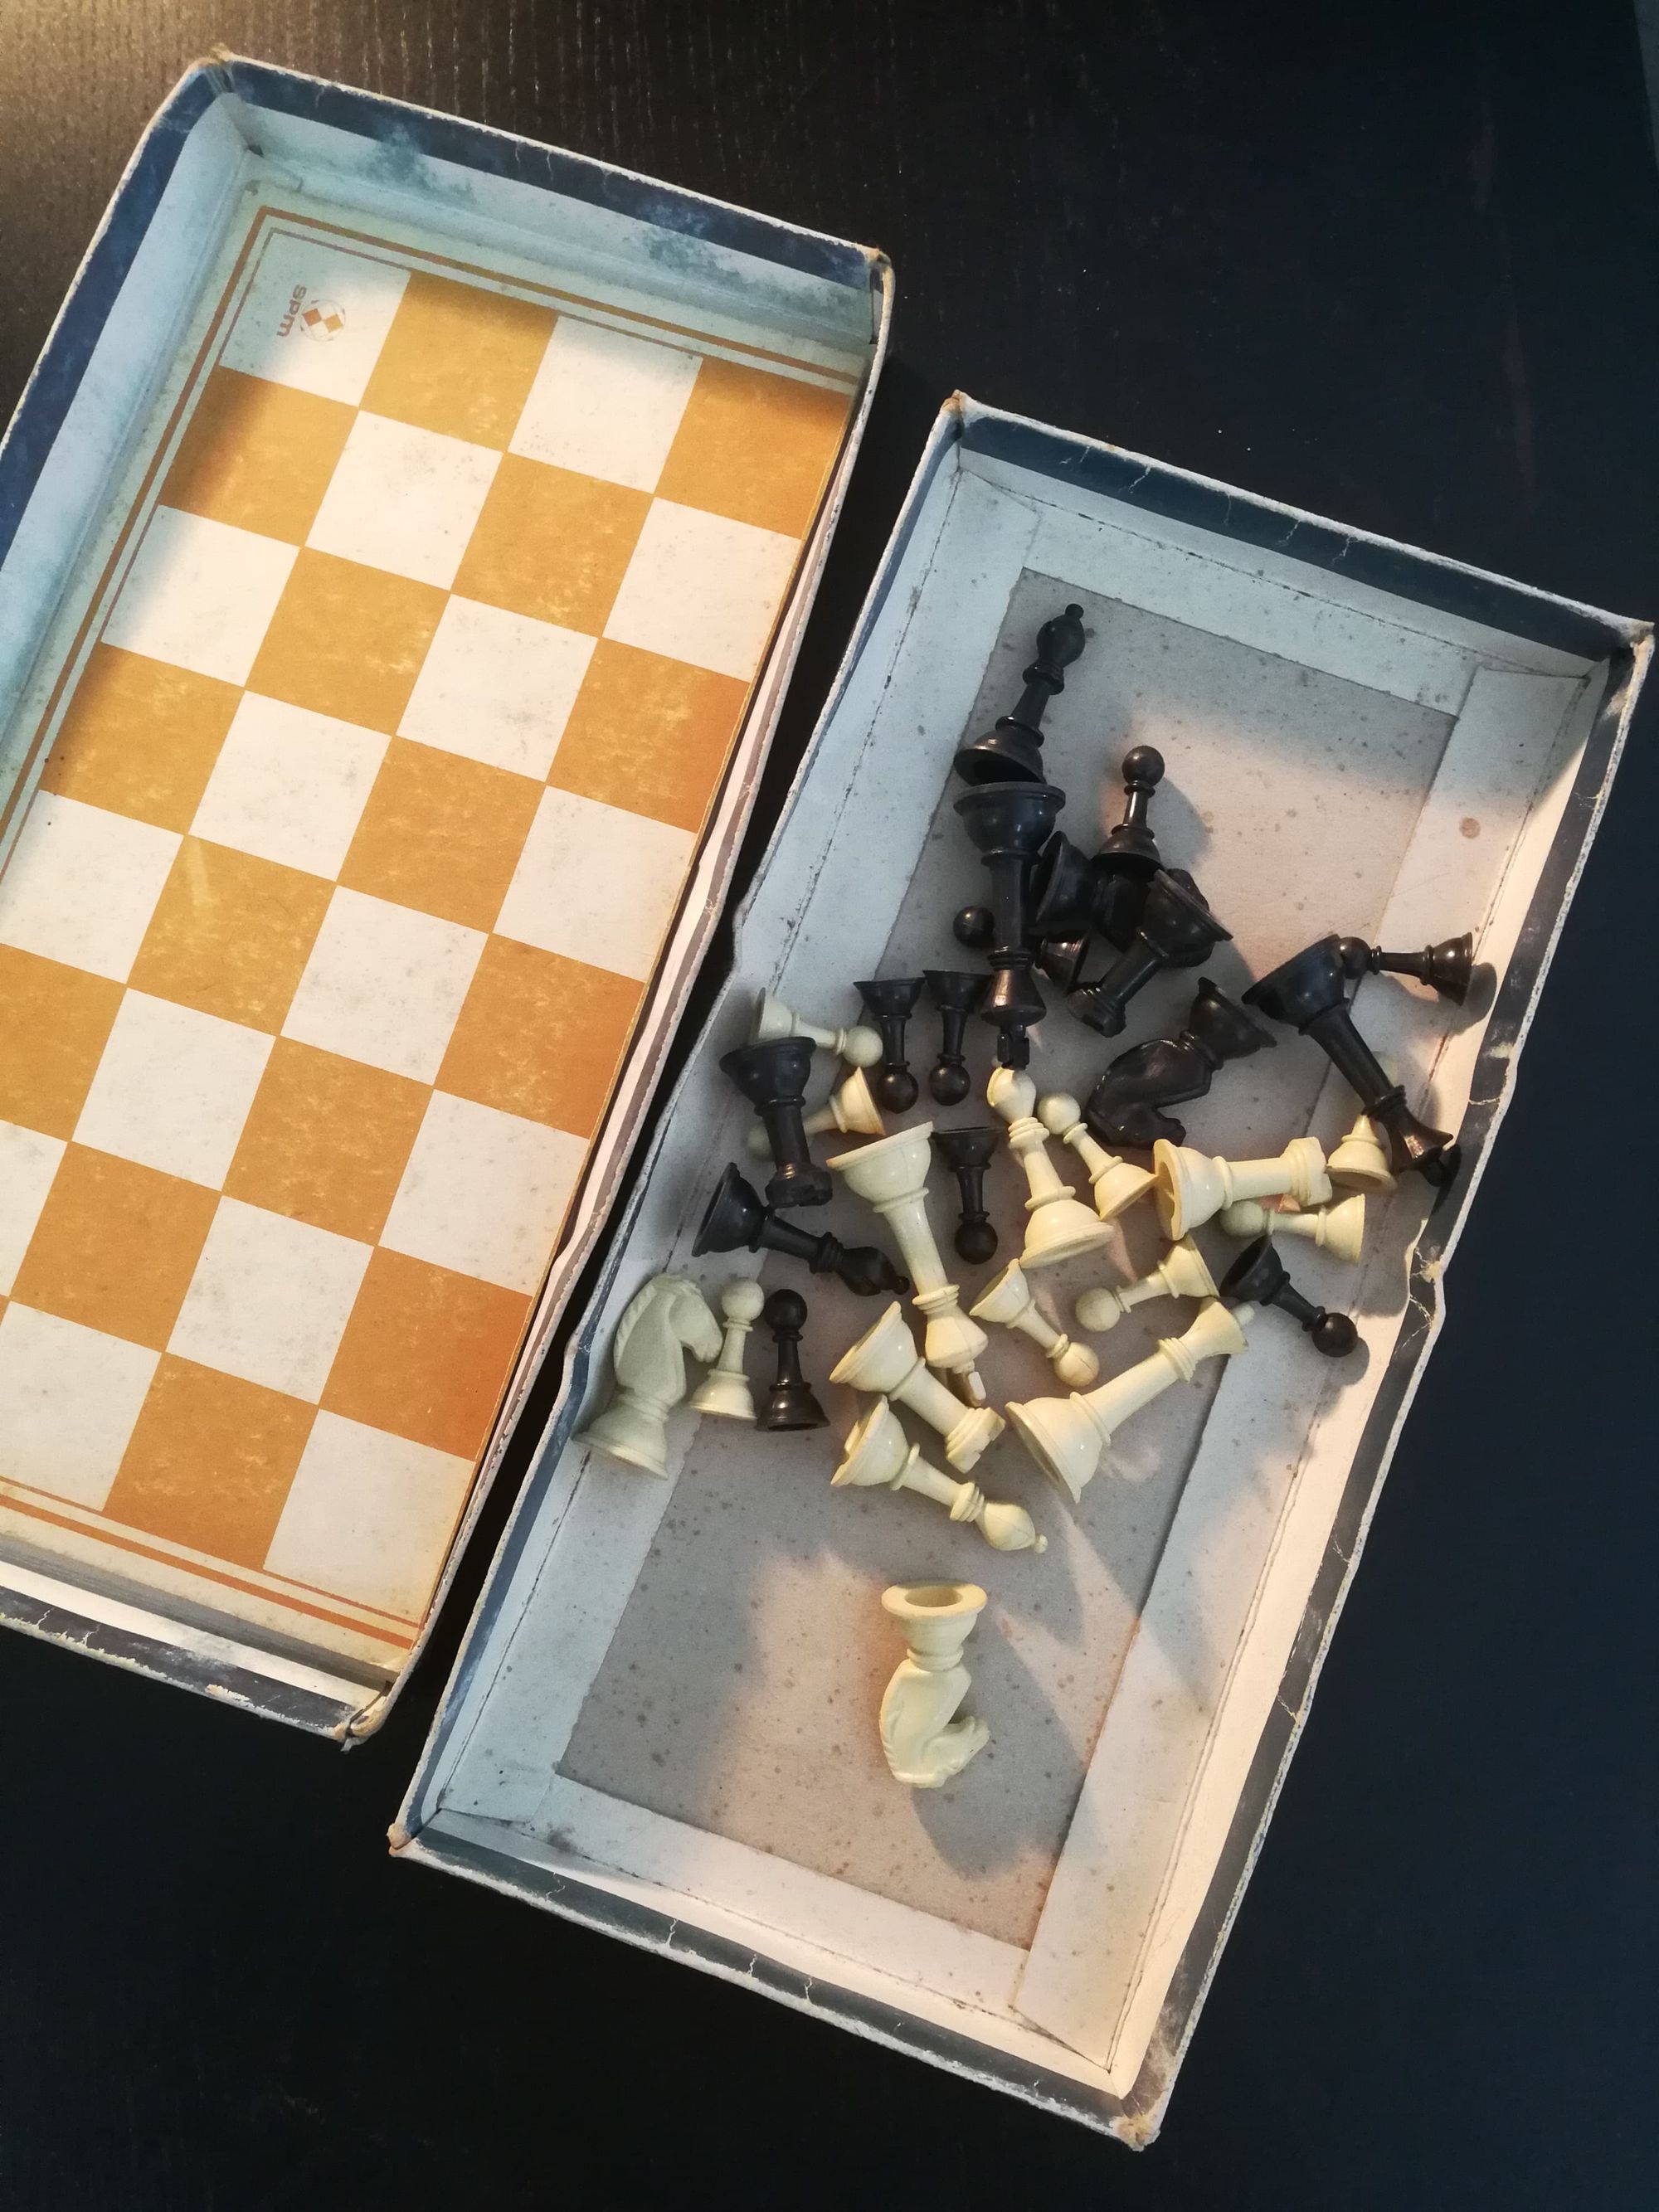 西洋棋 Chess